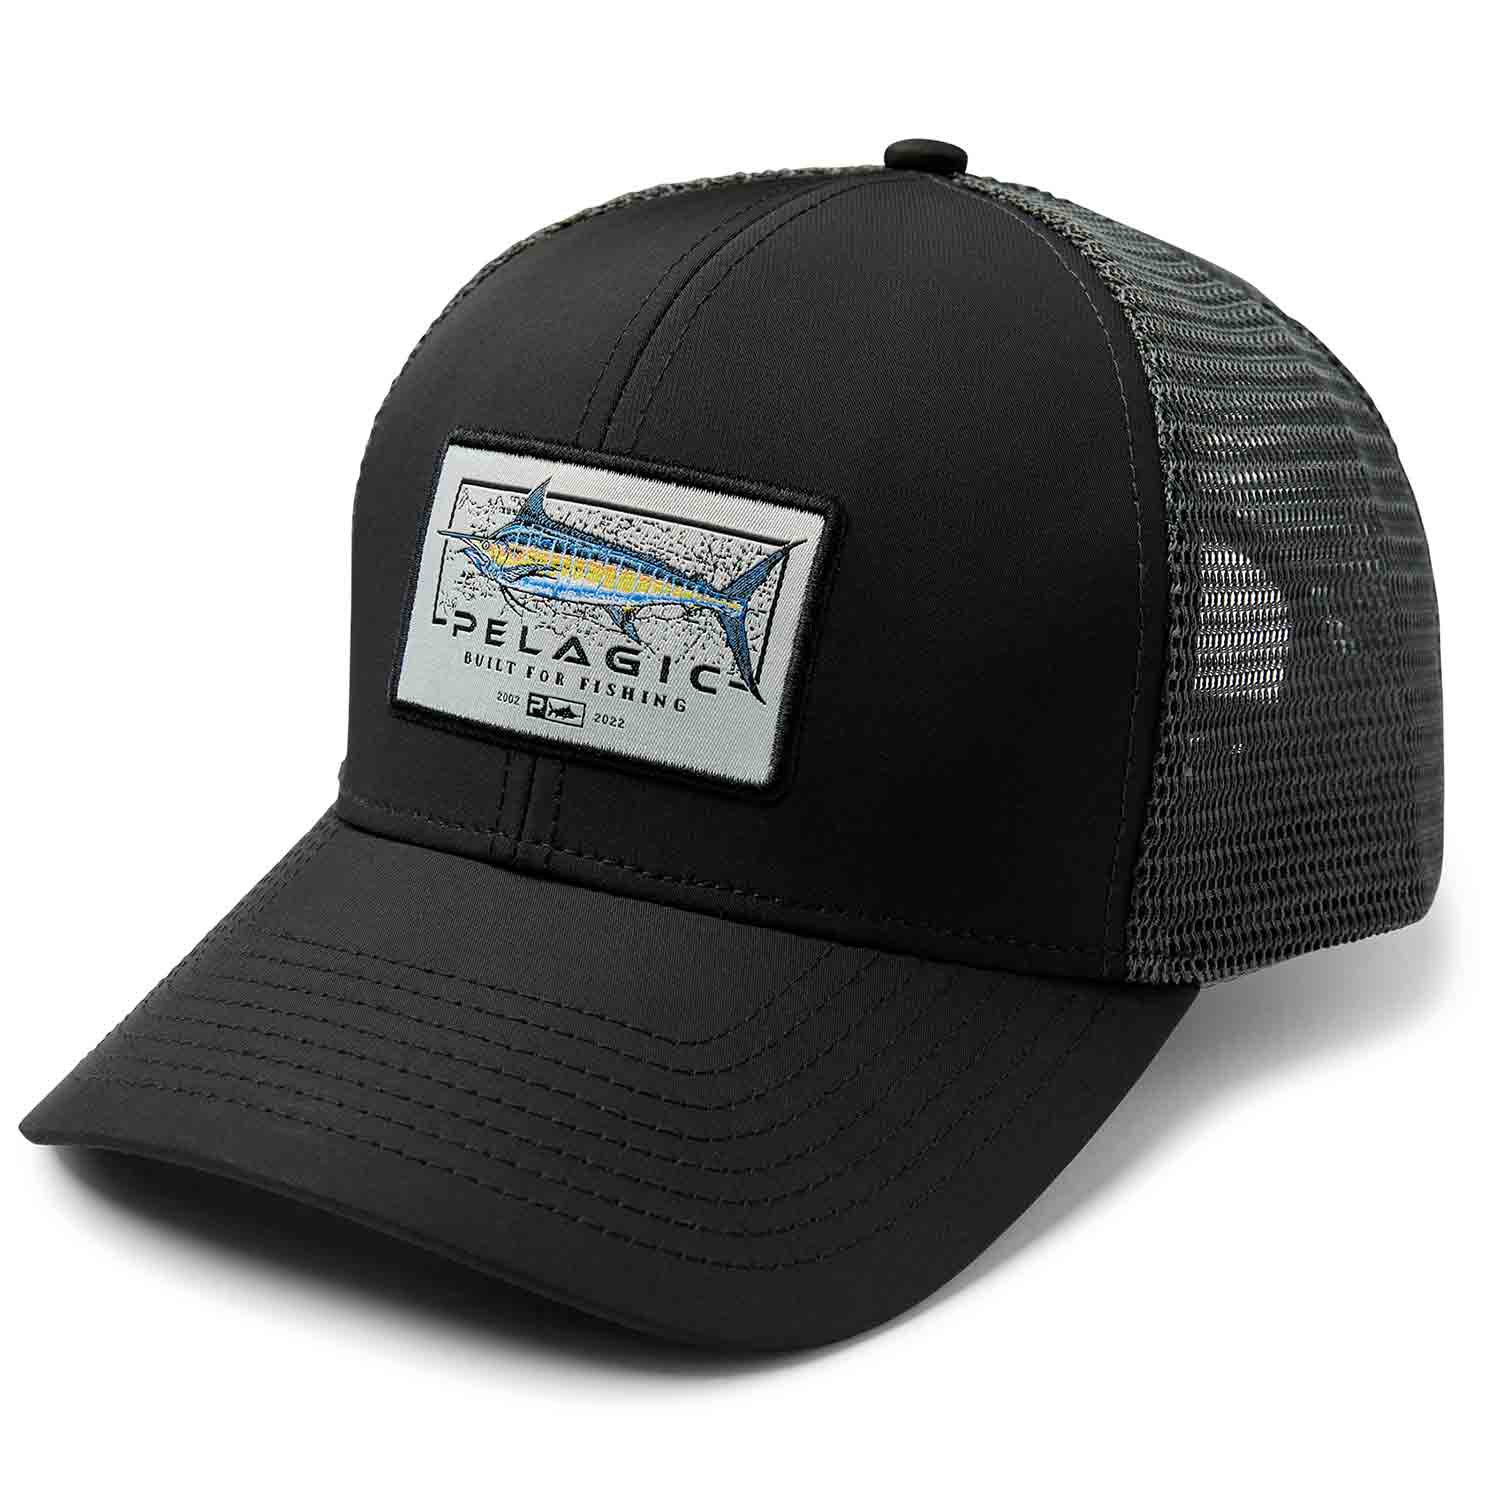 PELAGIC Marlin Minds Trucker Hat